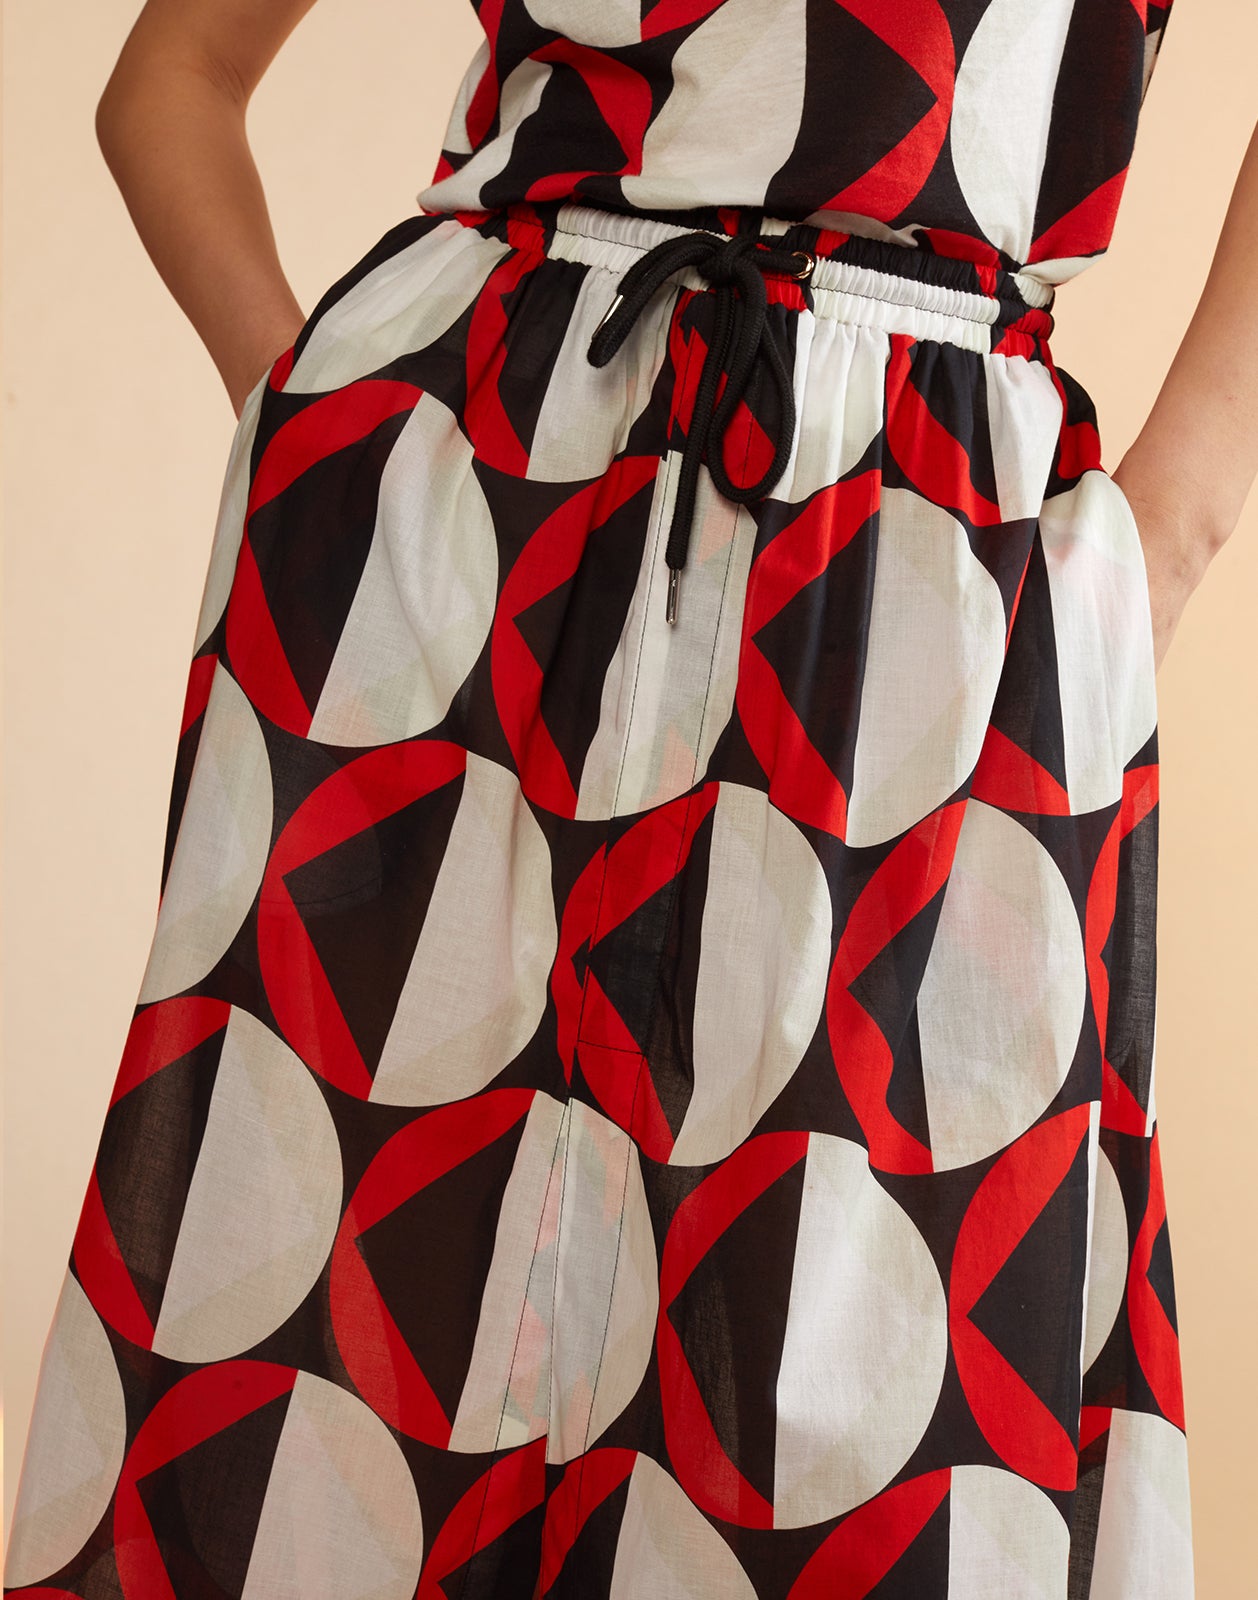 Mosaic Skirt